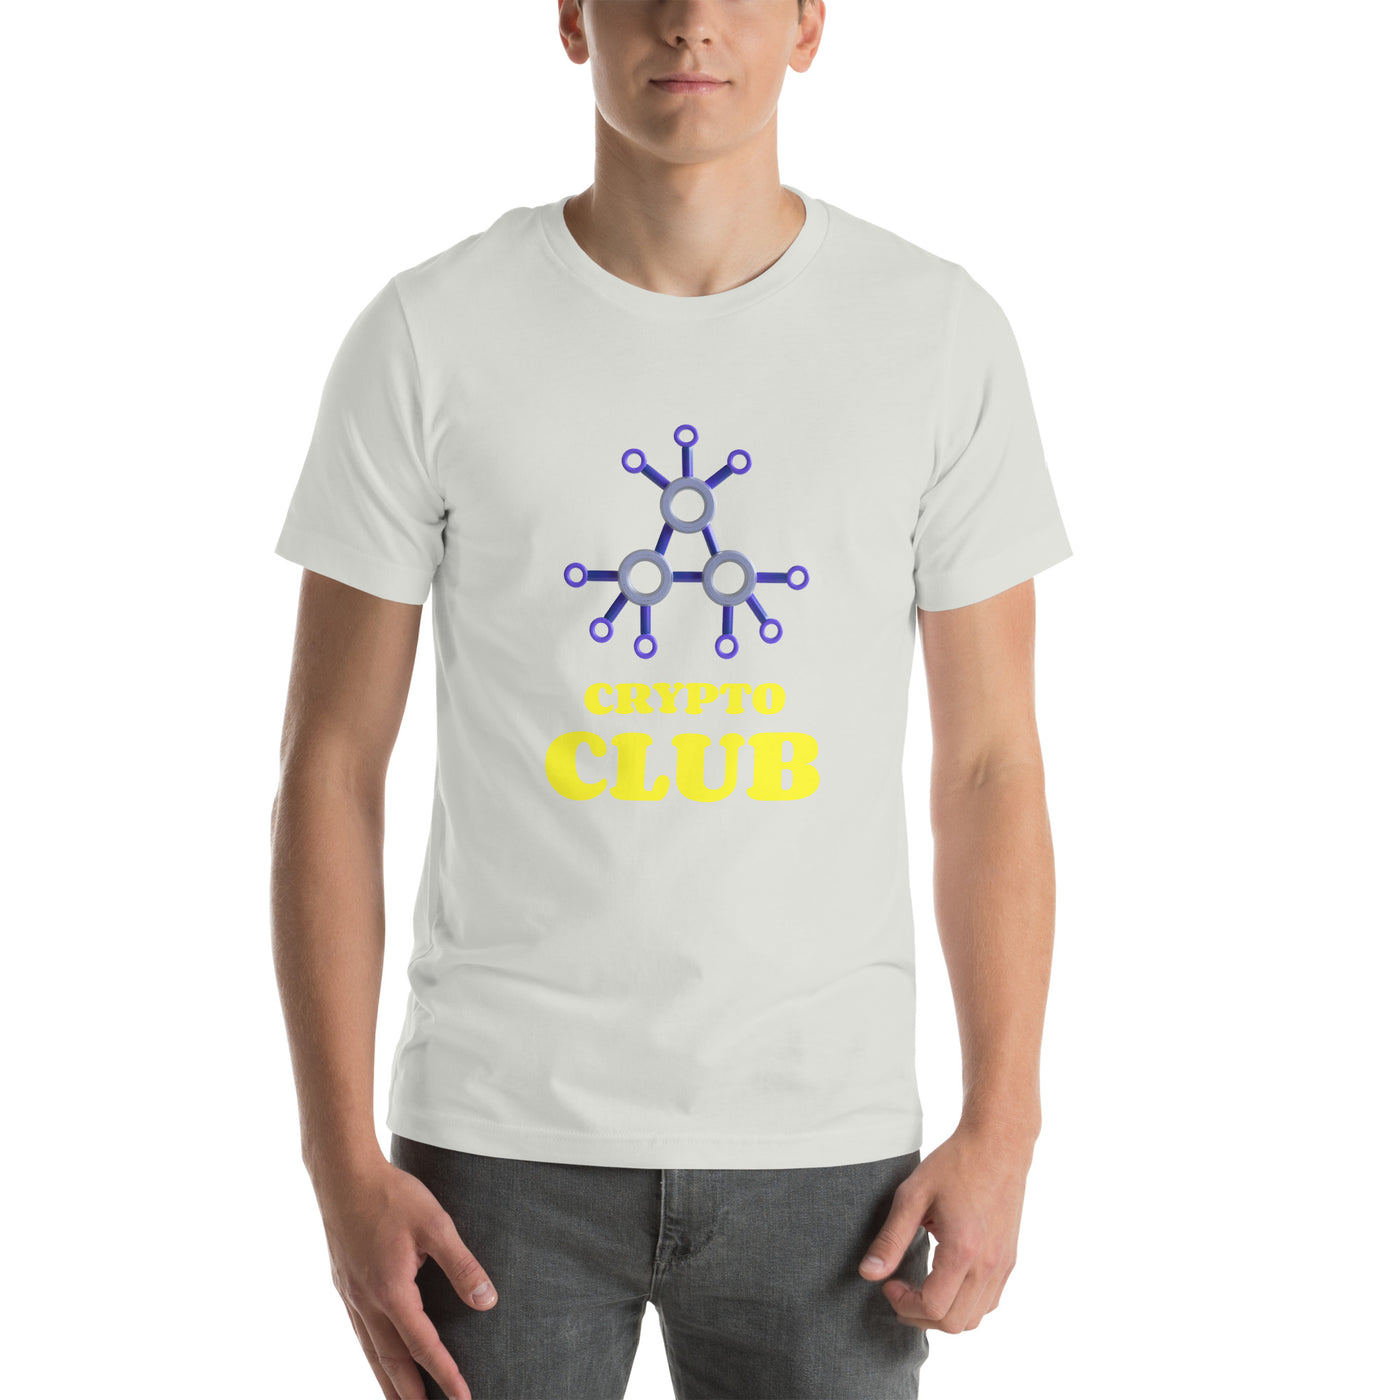 Crypto Club V1 - Unisex t-shirt